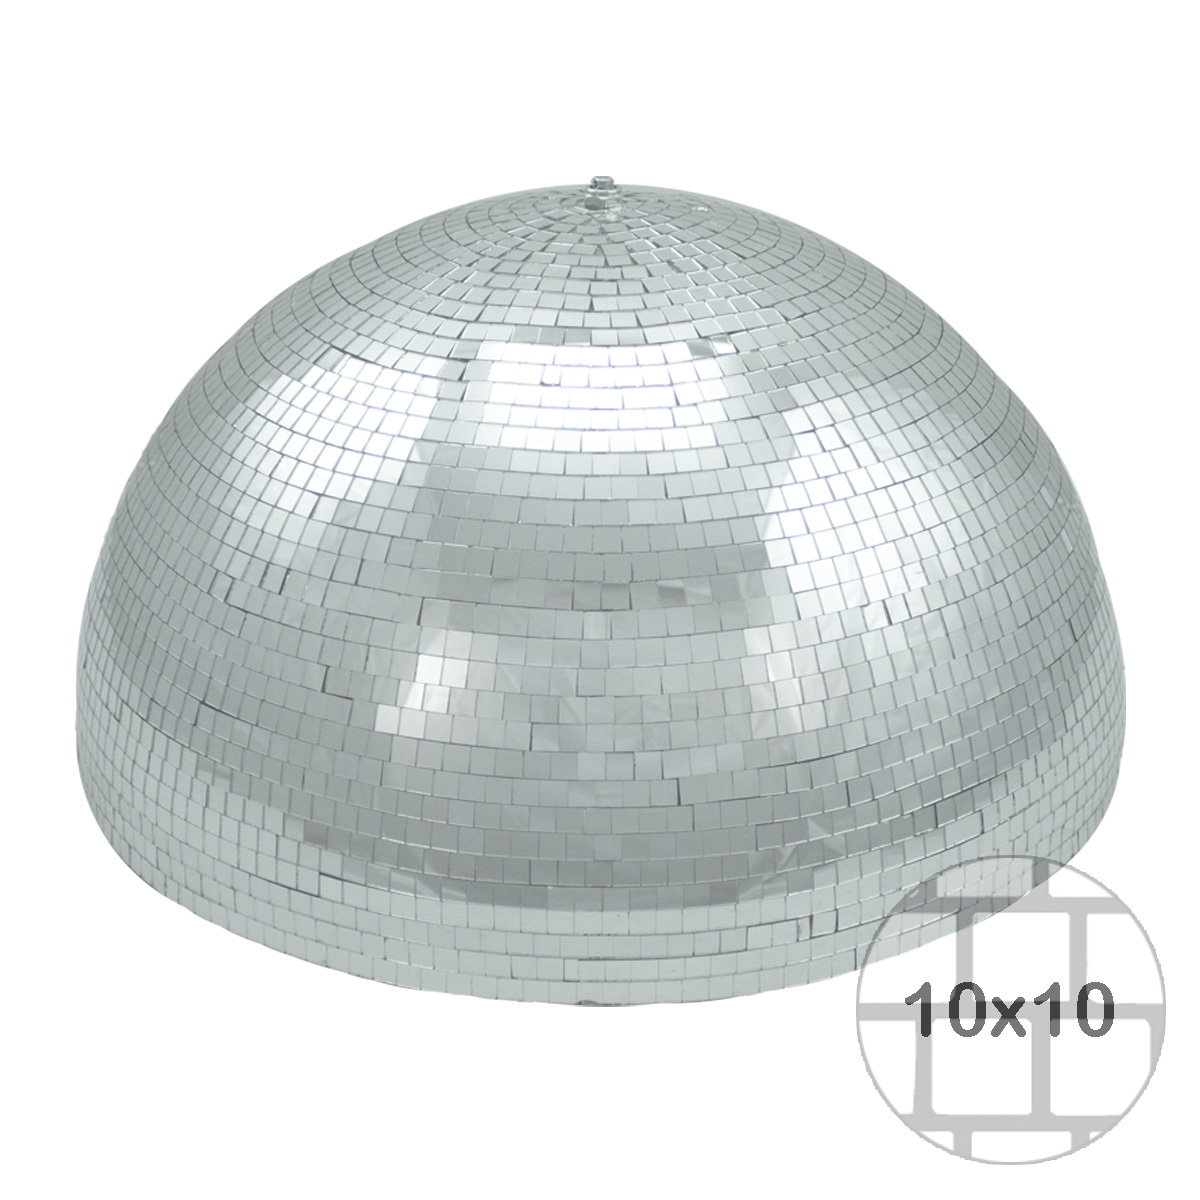 Spiegelkugel halb Halbkugel 50cm silber chrom- Diskokugel (Discokugel) Party Lichteffekt - Echtglas - mirrorball half safety silver chrome color